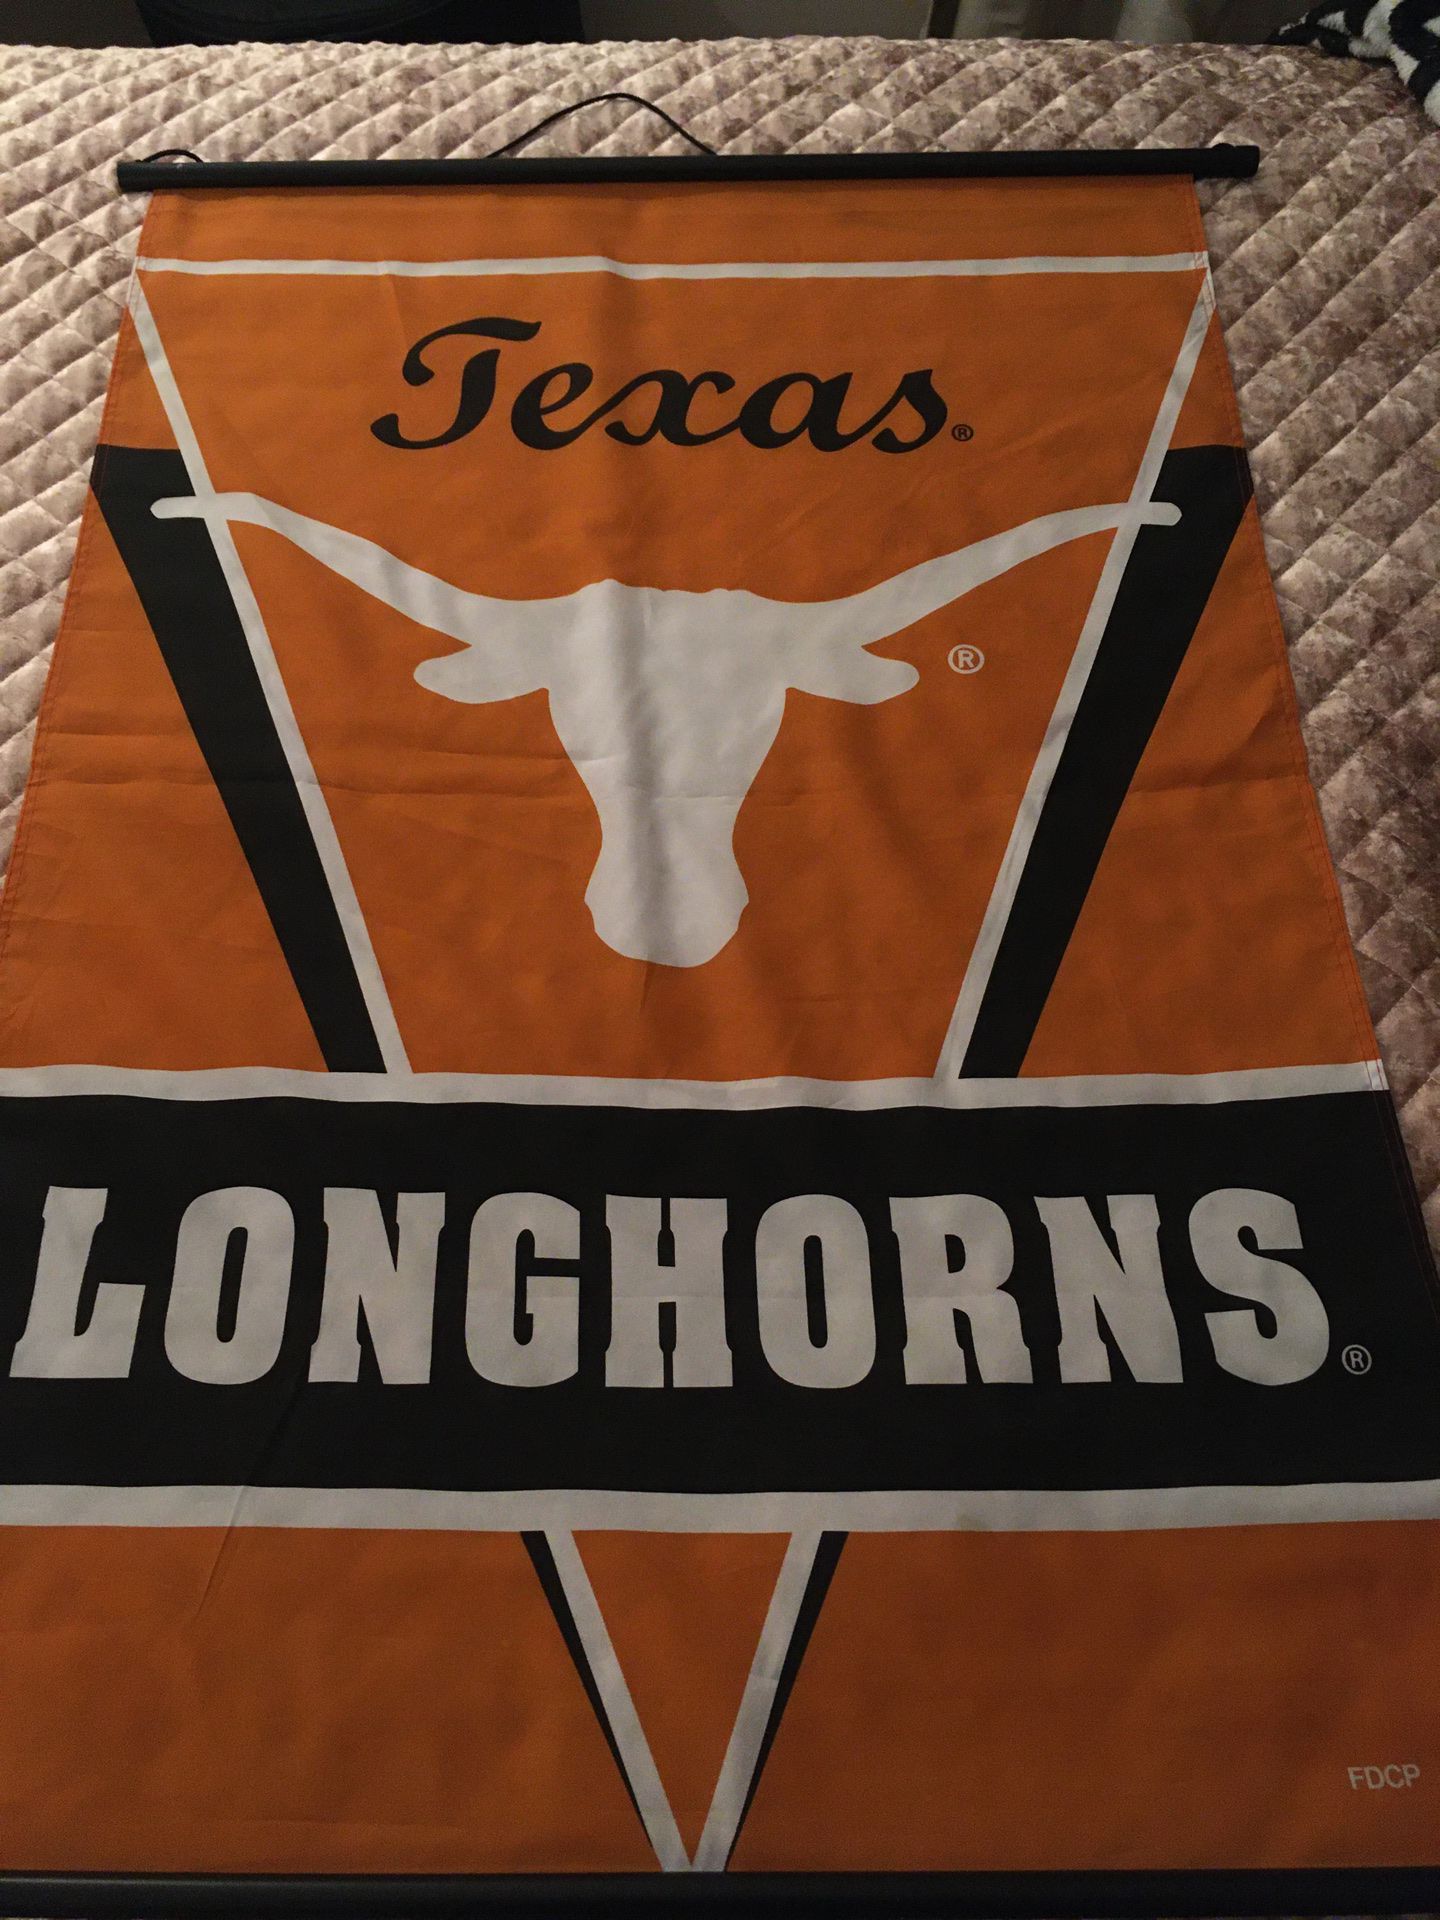 Texas Longhorns banner